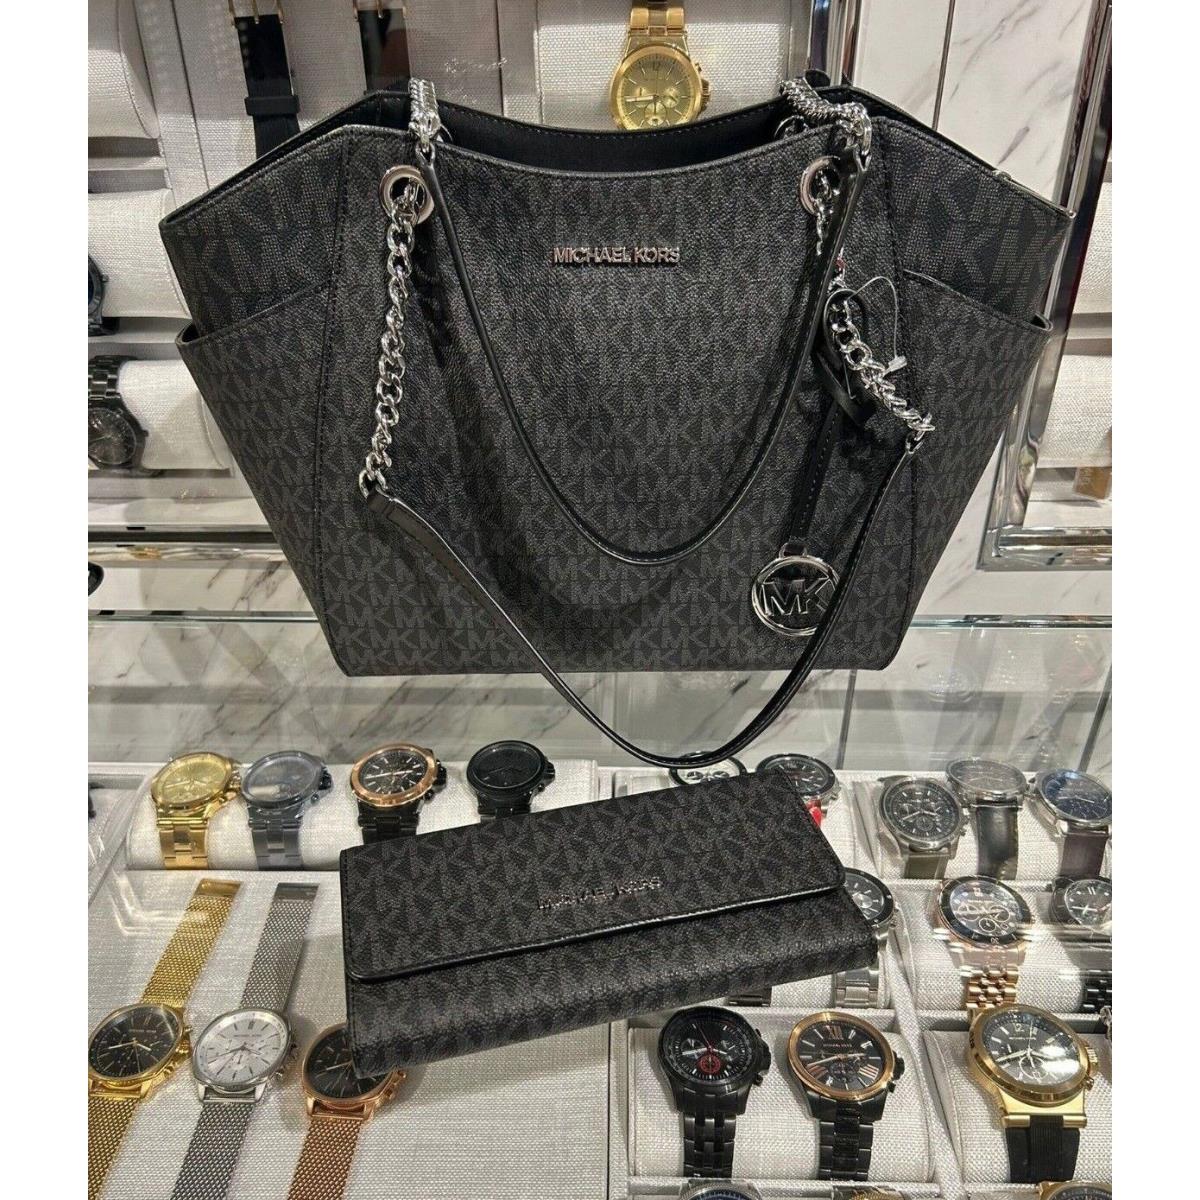 Michael Kors Womens Large Chain Shoulder Tote Bag Purse Handbag +trifold Wallet BLACK (MK Signature)